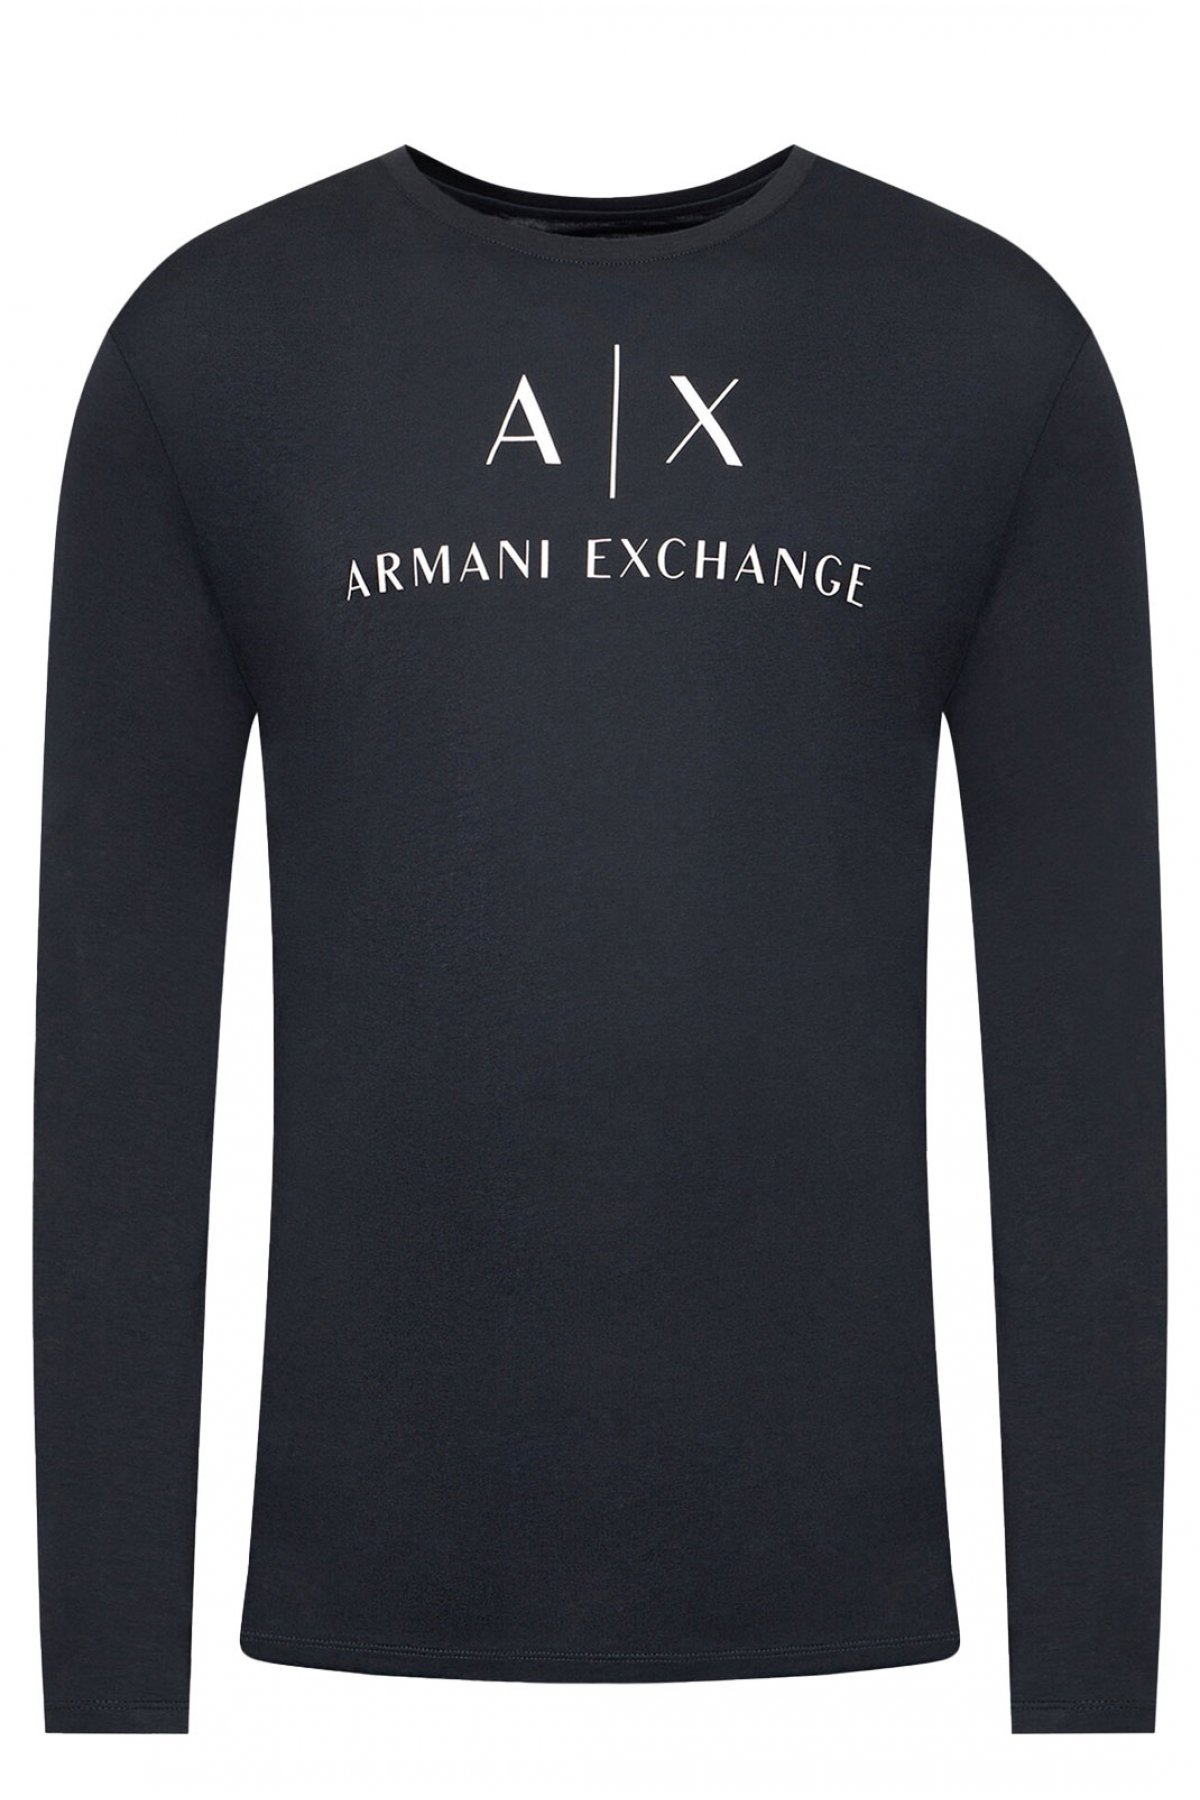 Armani Exchange 8NZTCH Z8H4Z tričko černé